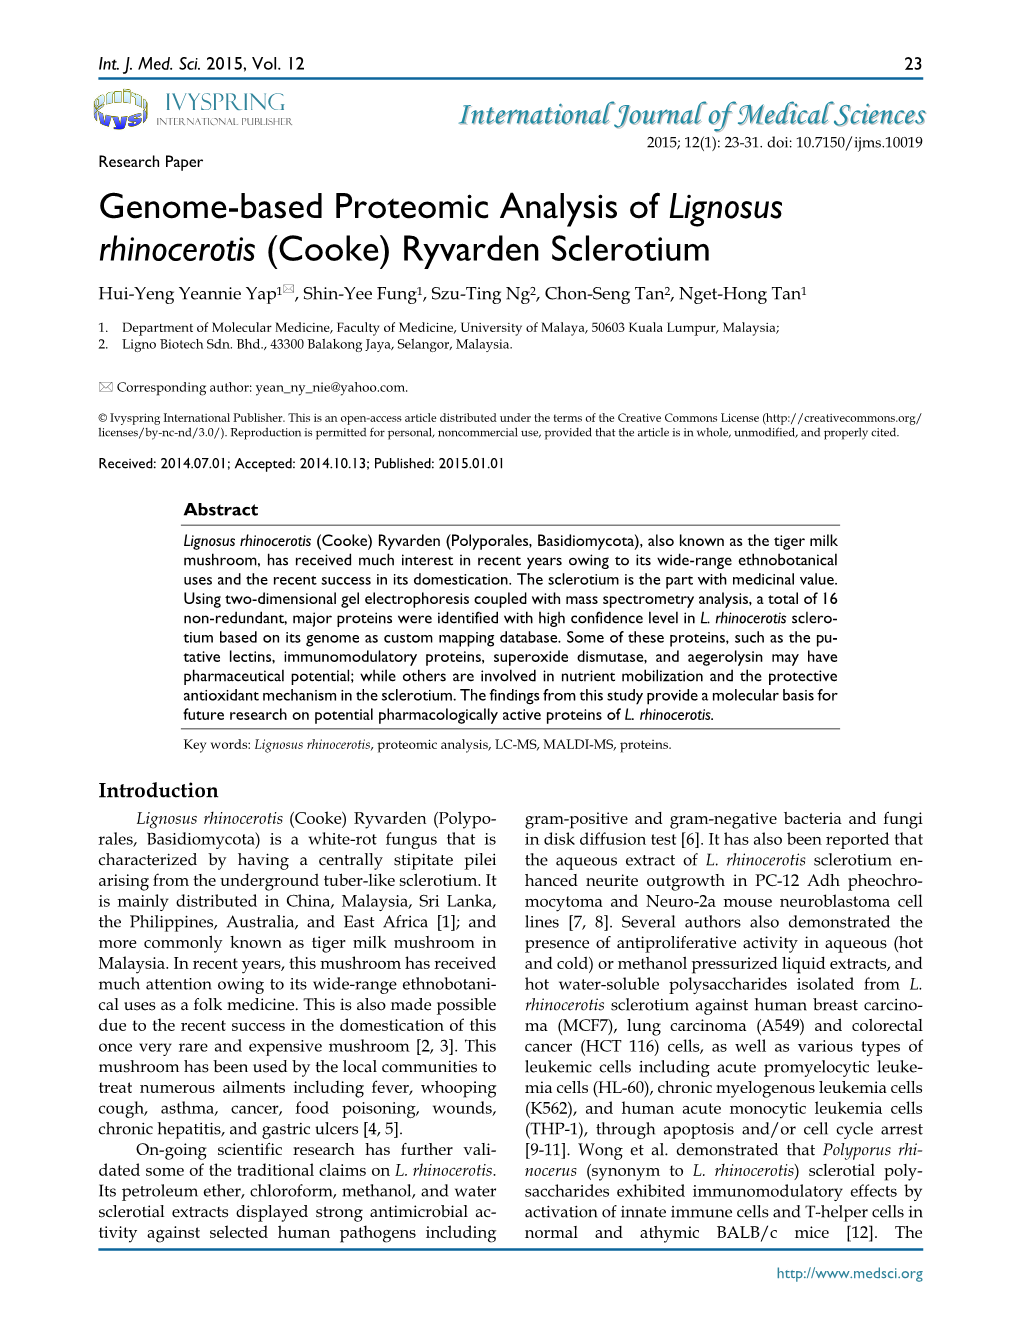 Genome-Based Proteomic Analysis of Lignosus Rhinocerotis (Cooke